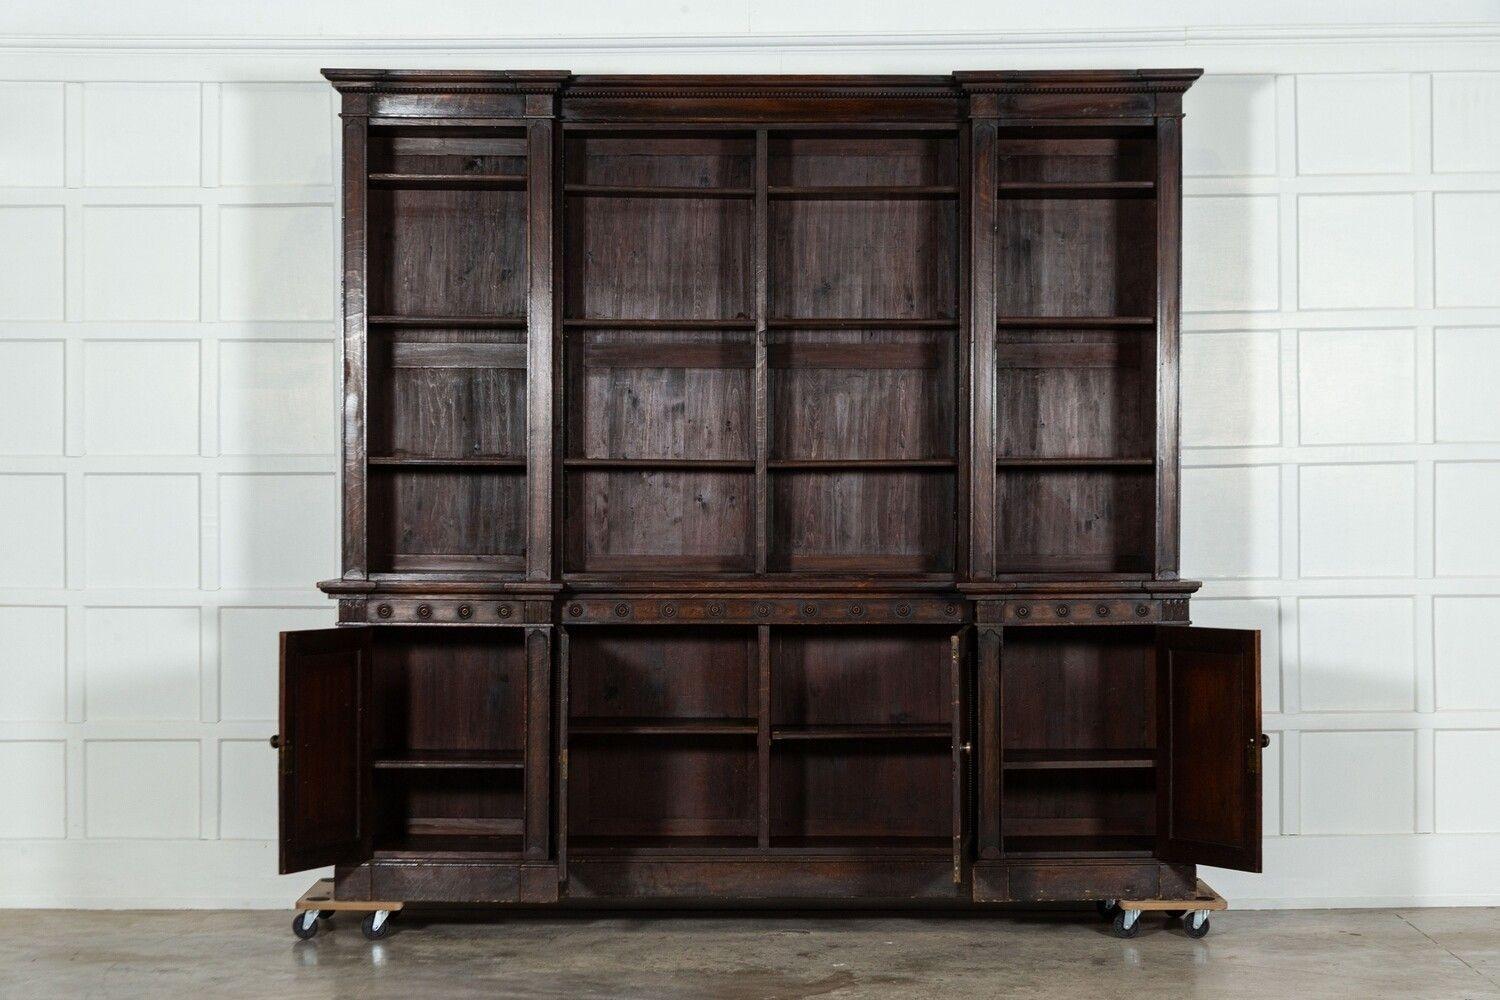 circa 1870
Monumental Oak Inverted Breakfront Bookcase
sku 1657
Base W248 x D53 x H90 cm
Top W251 x D43 x H145 cm
Together w251 x D53 x H235 cm